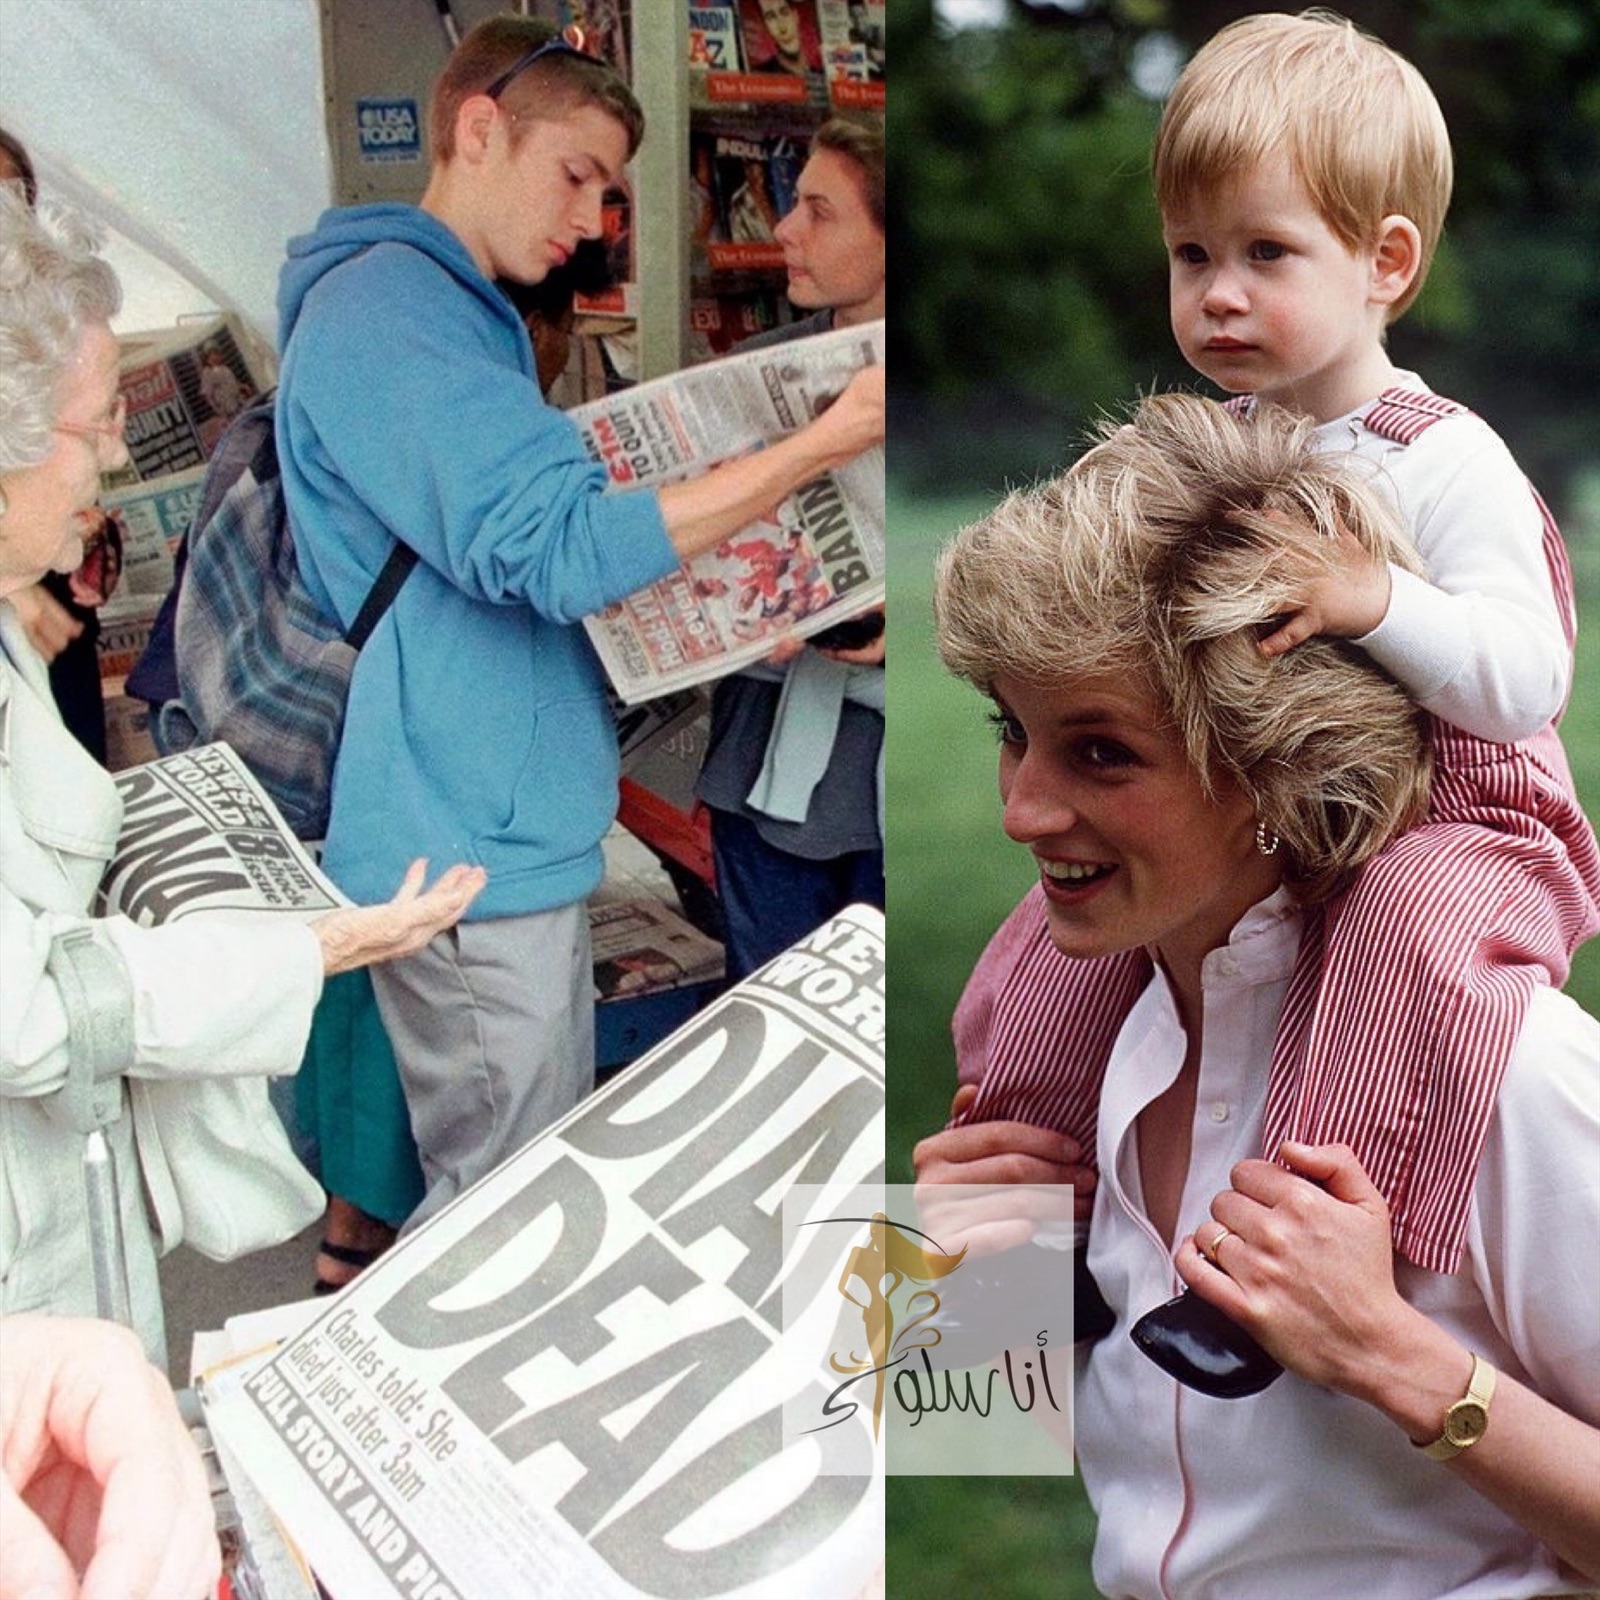 Twenty-five years since the murder of Princess Diana